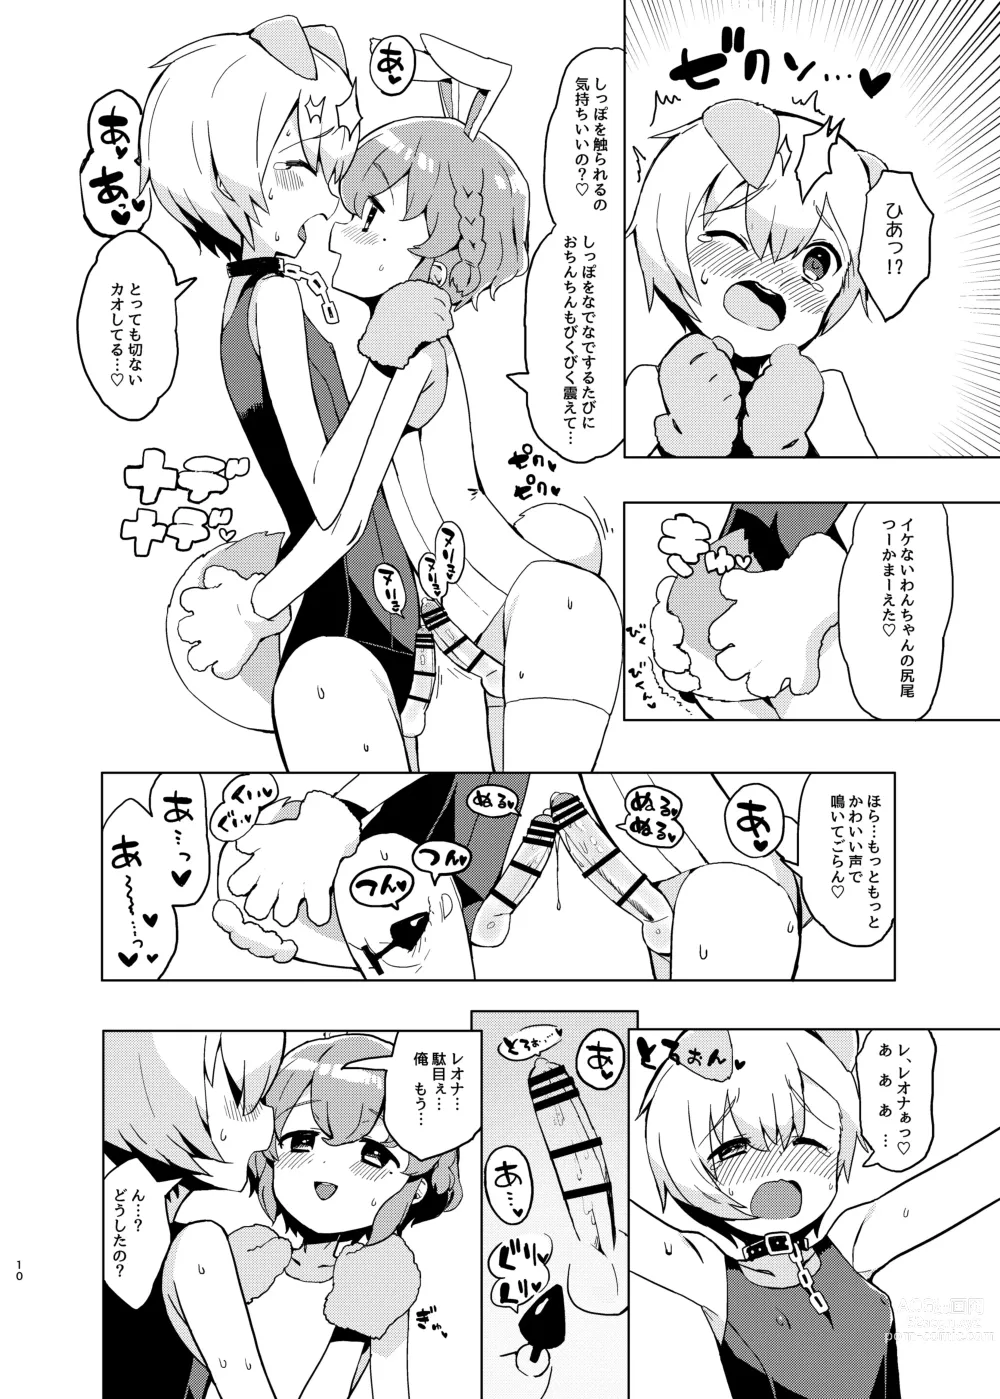 Page 9 of doujinshi Miwaku no Honey Sweet Rendezvous